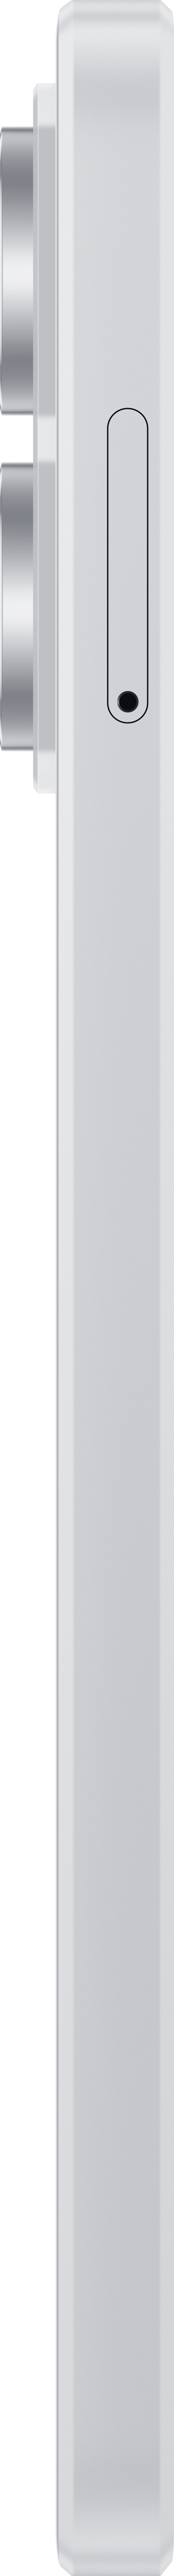 XIAOMI Redmi Note 13 5G White 256 Dual Arctic SIM GB